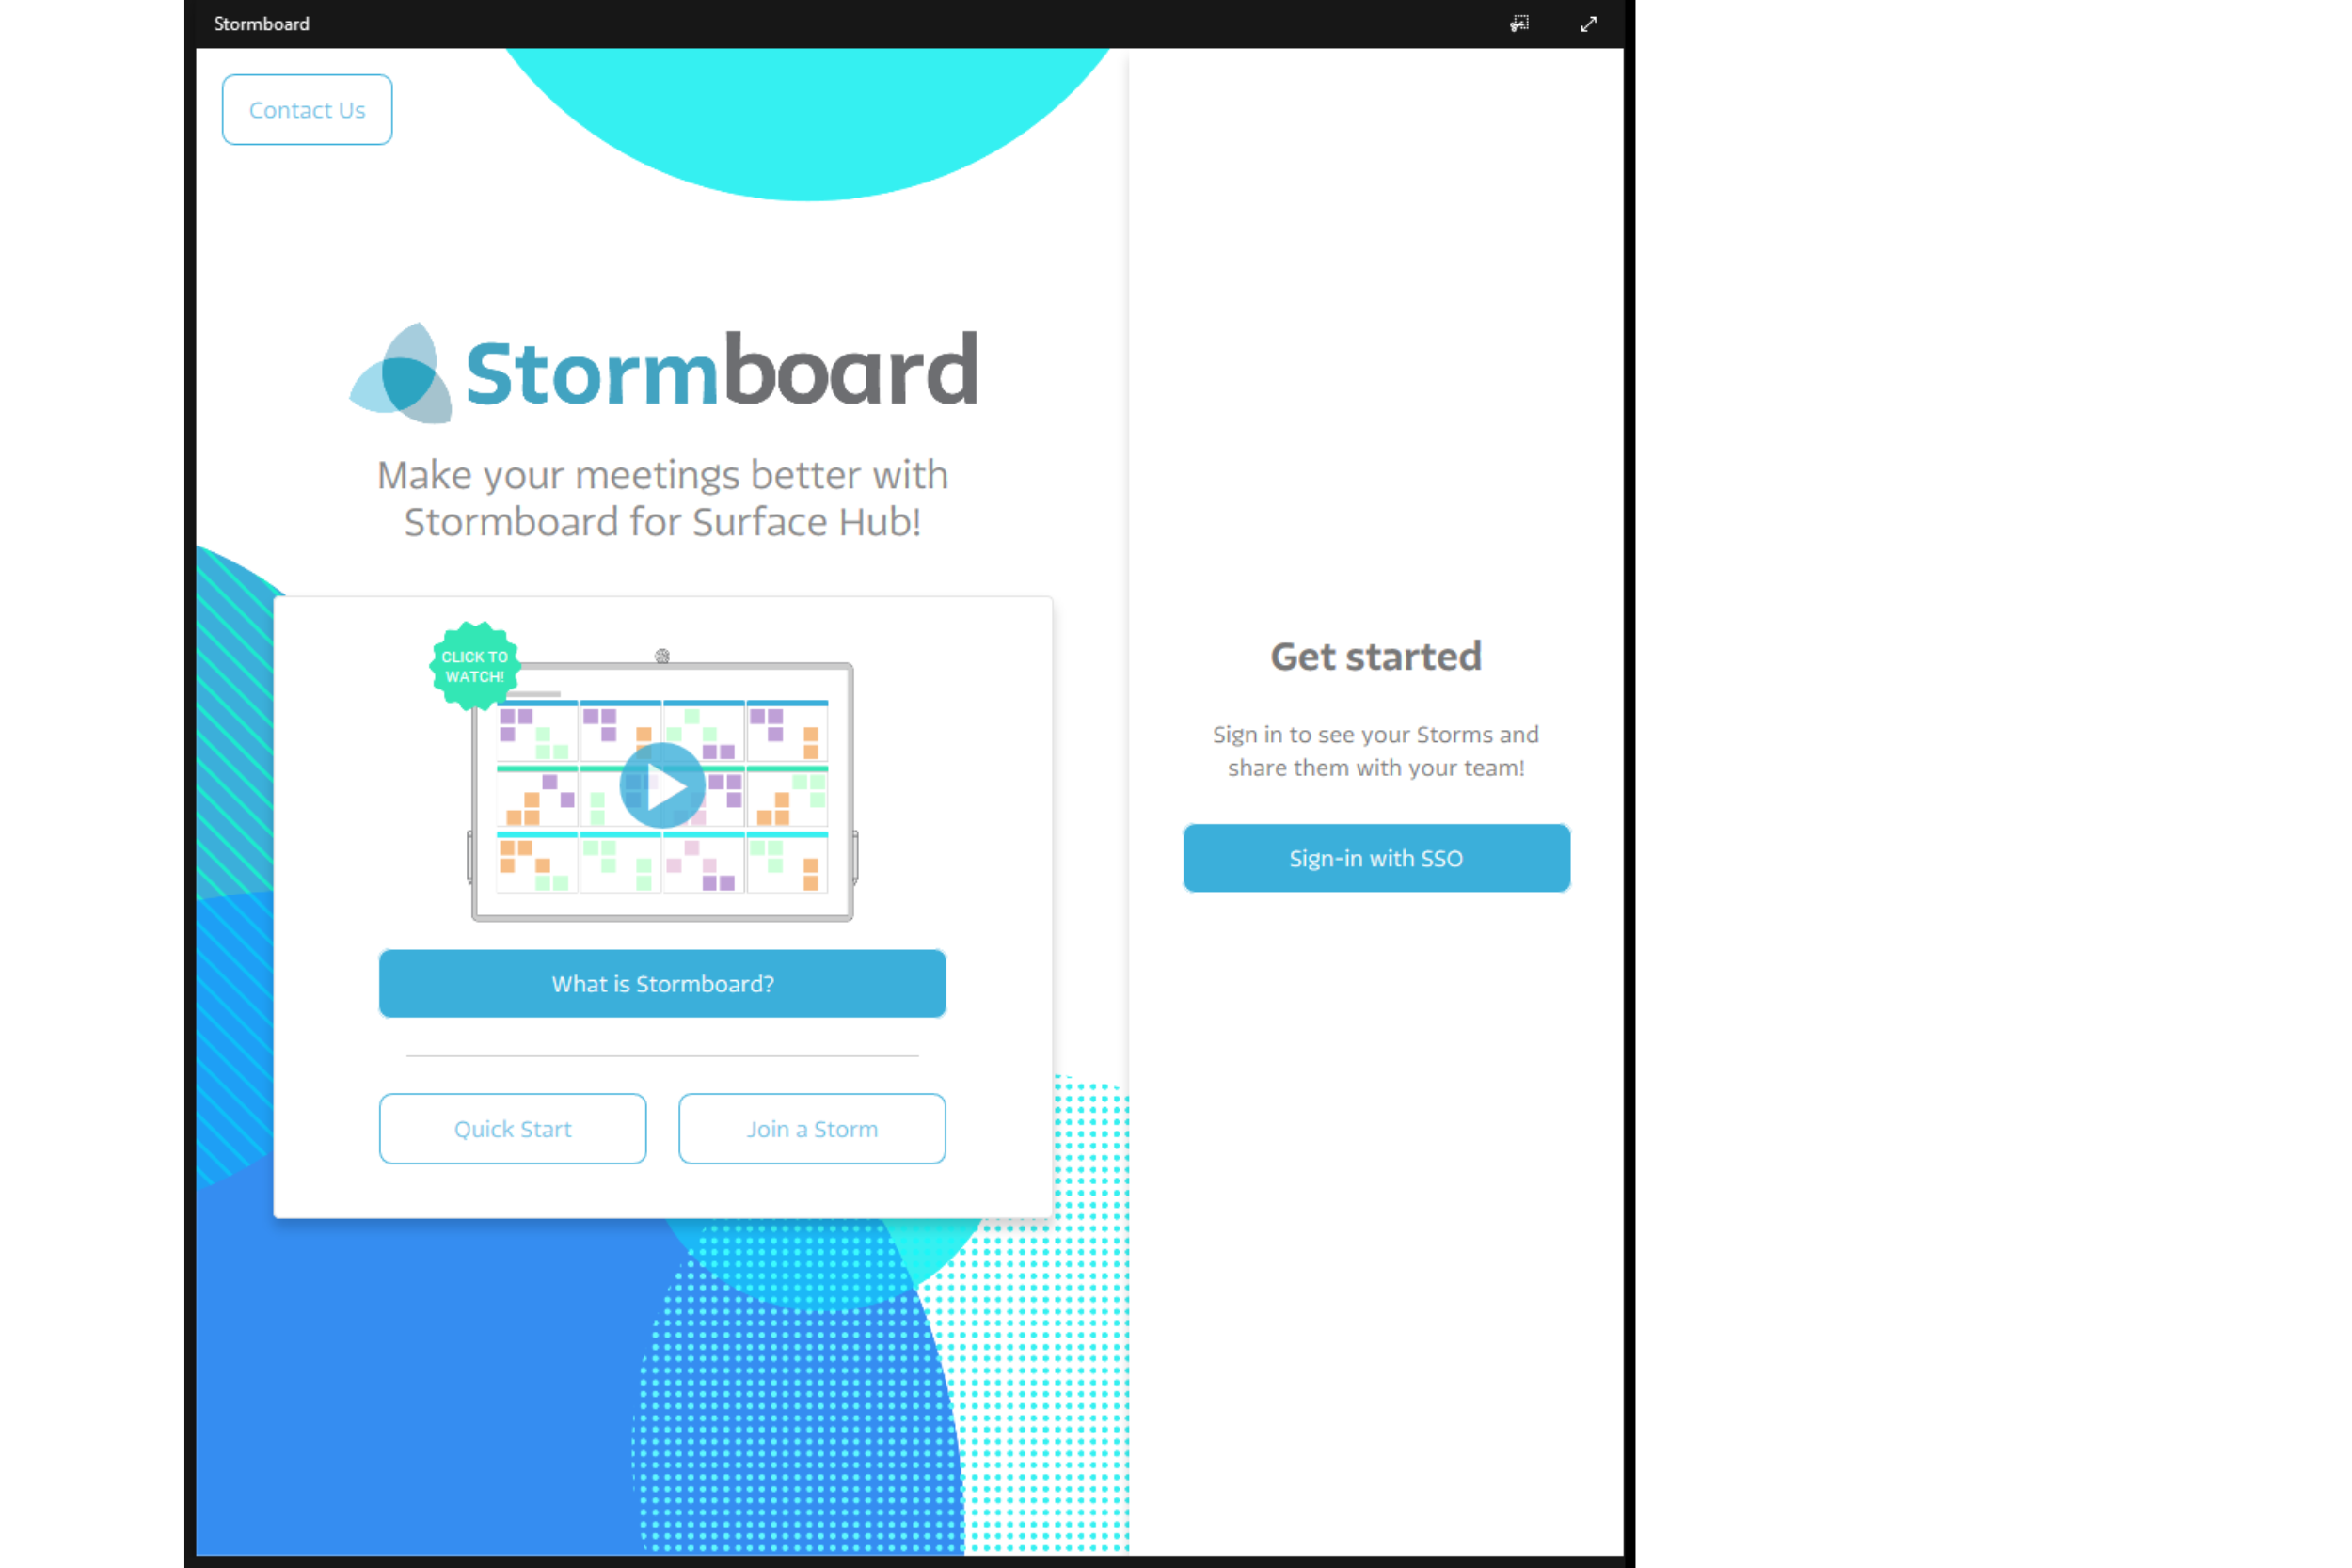 Stormboard homepage on a Microsoft Surface Hub